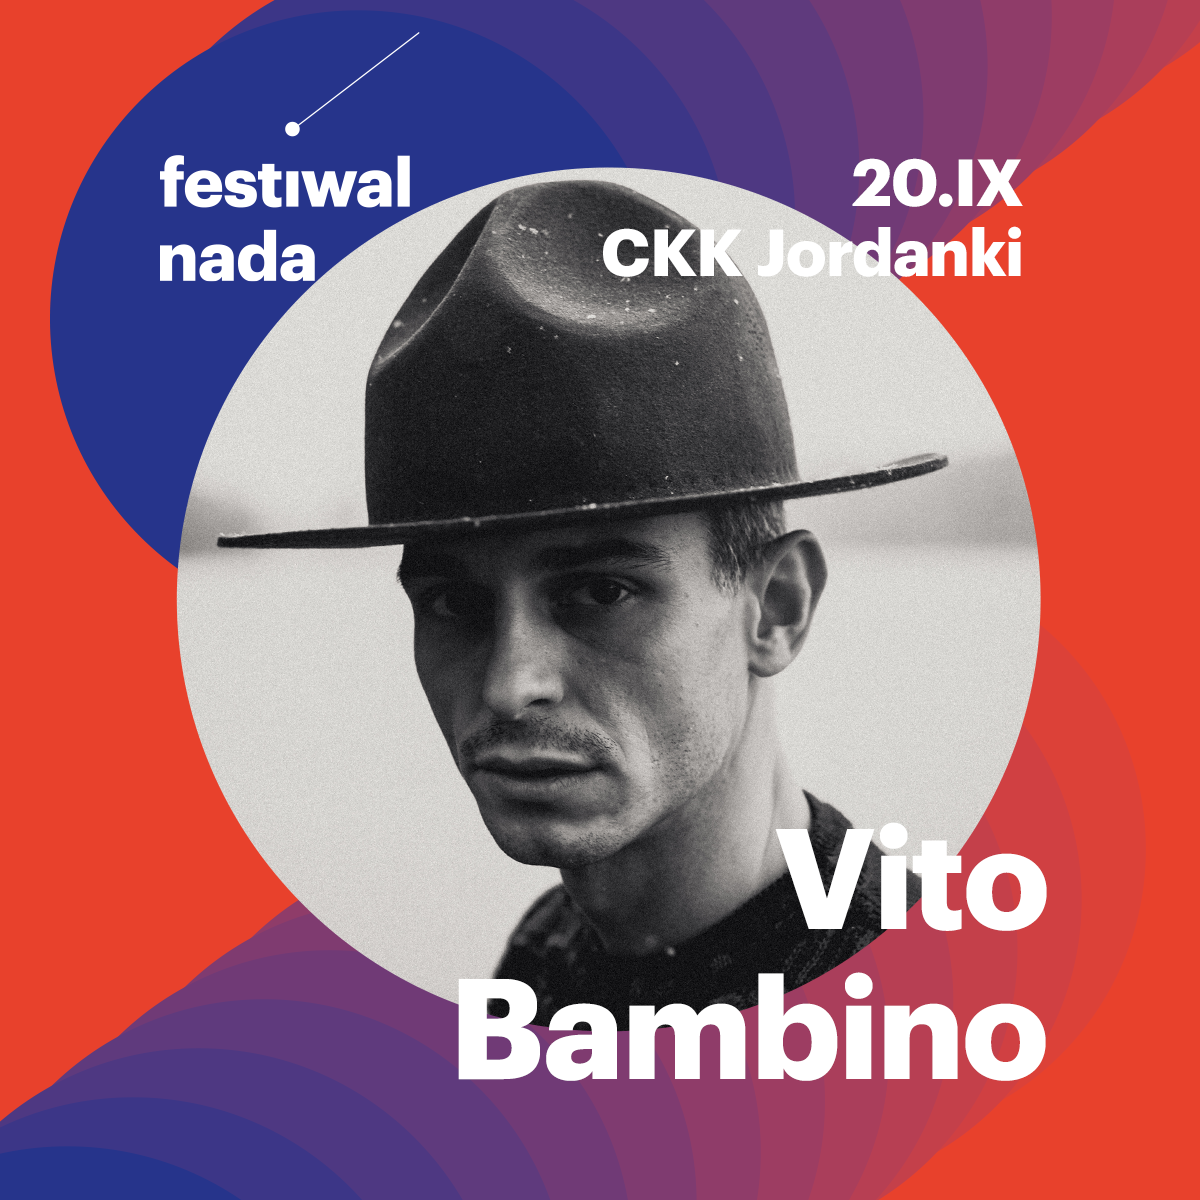 Vito Bambino - Podpalmy to